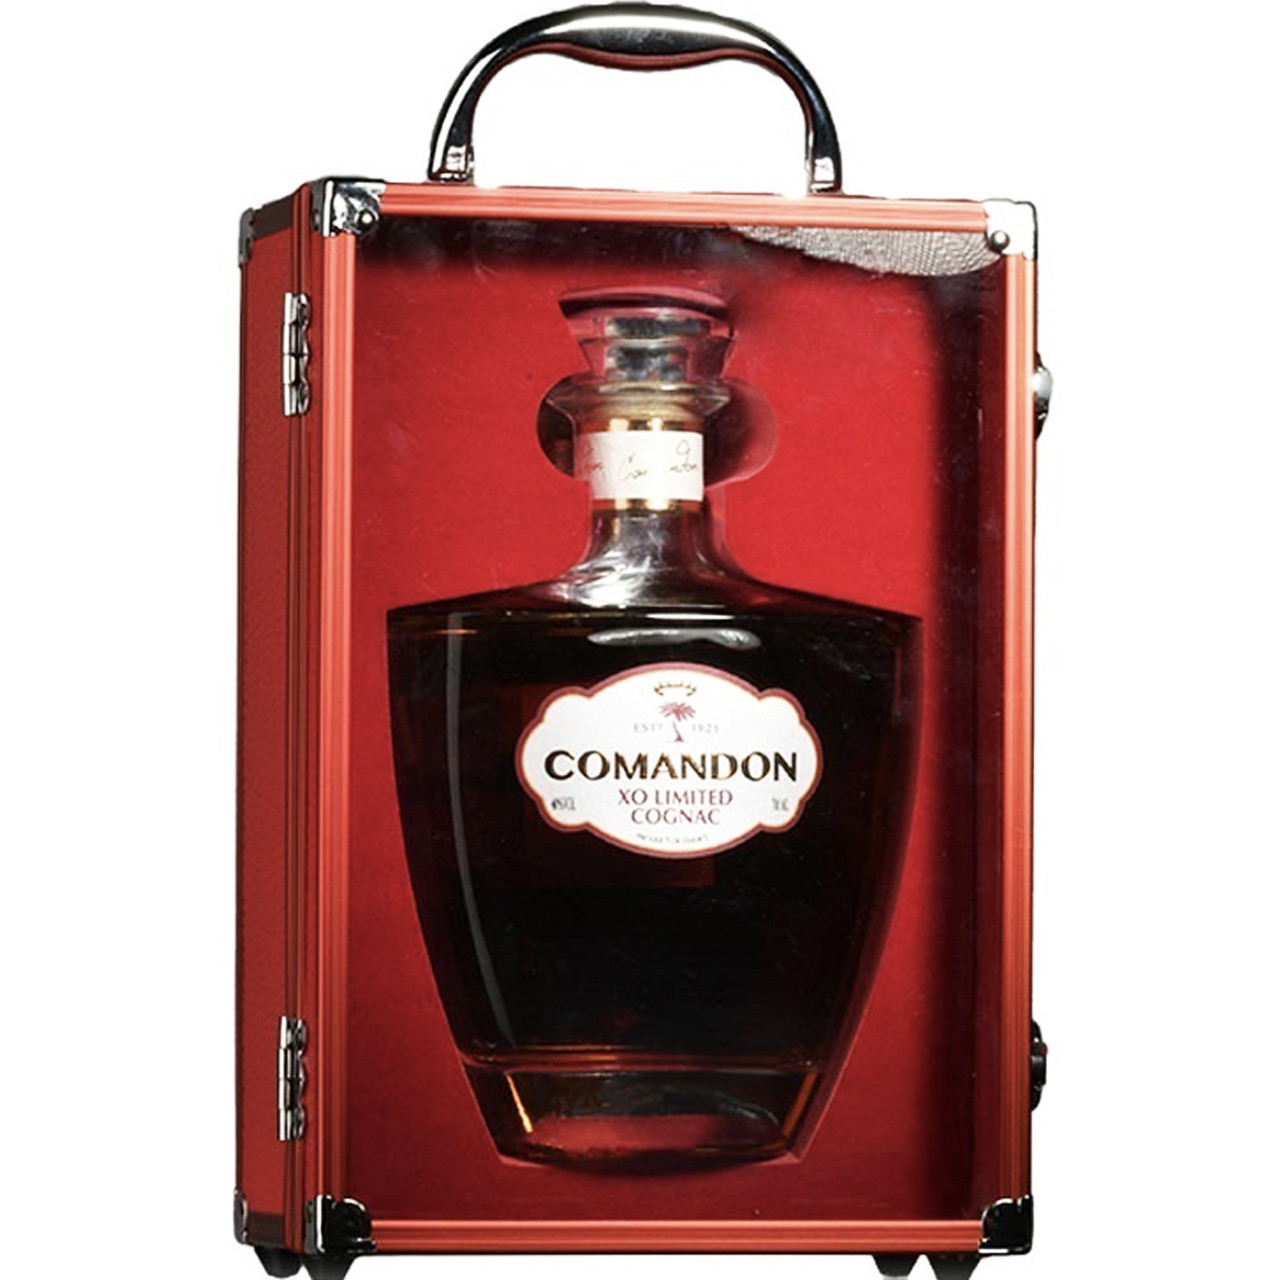 Rum *special limited Cognac edition*